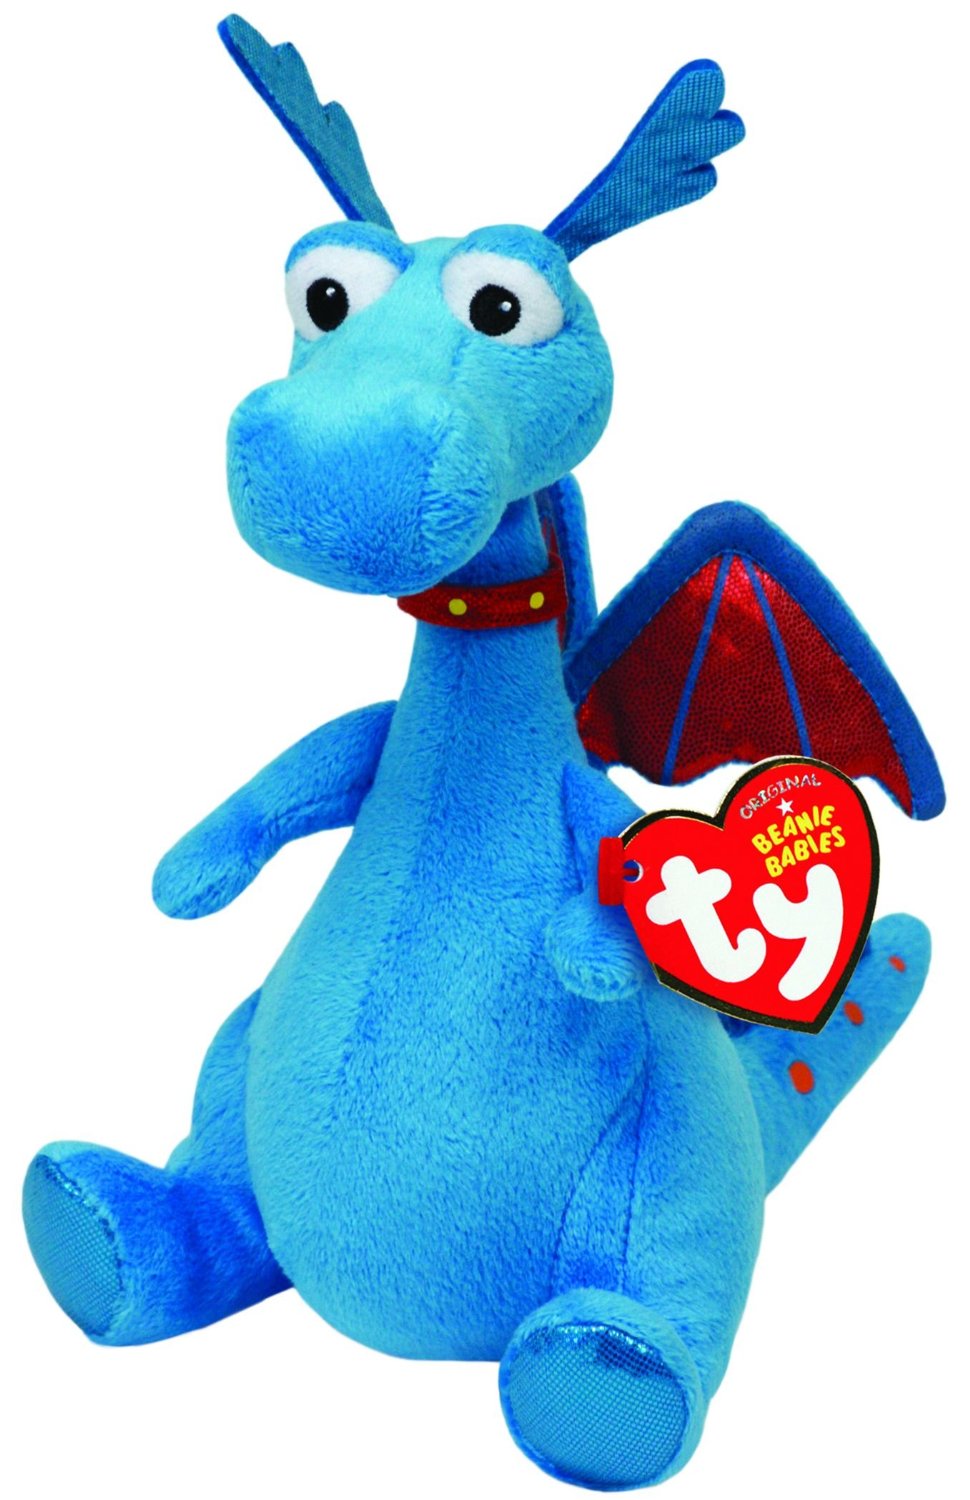 Ty Disney Doc McStuffins Stuffy – Dragon Only $6.69 (Reg. $9.99)